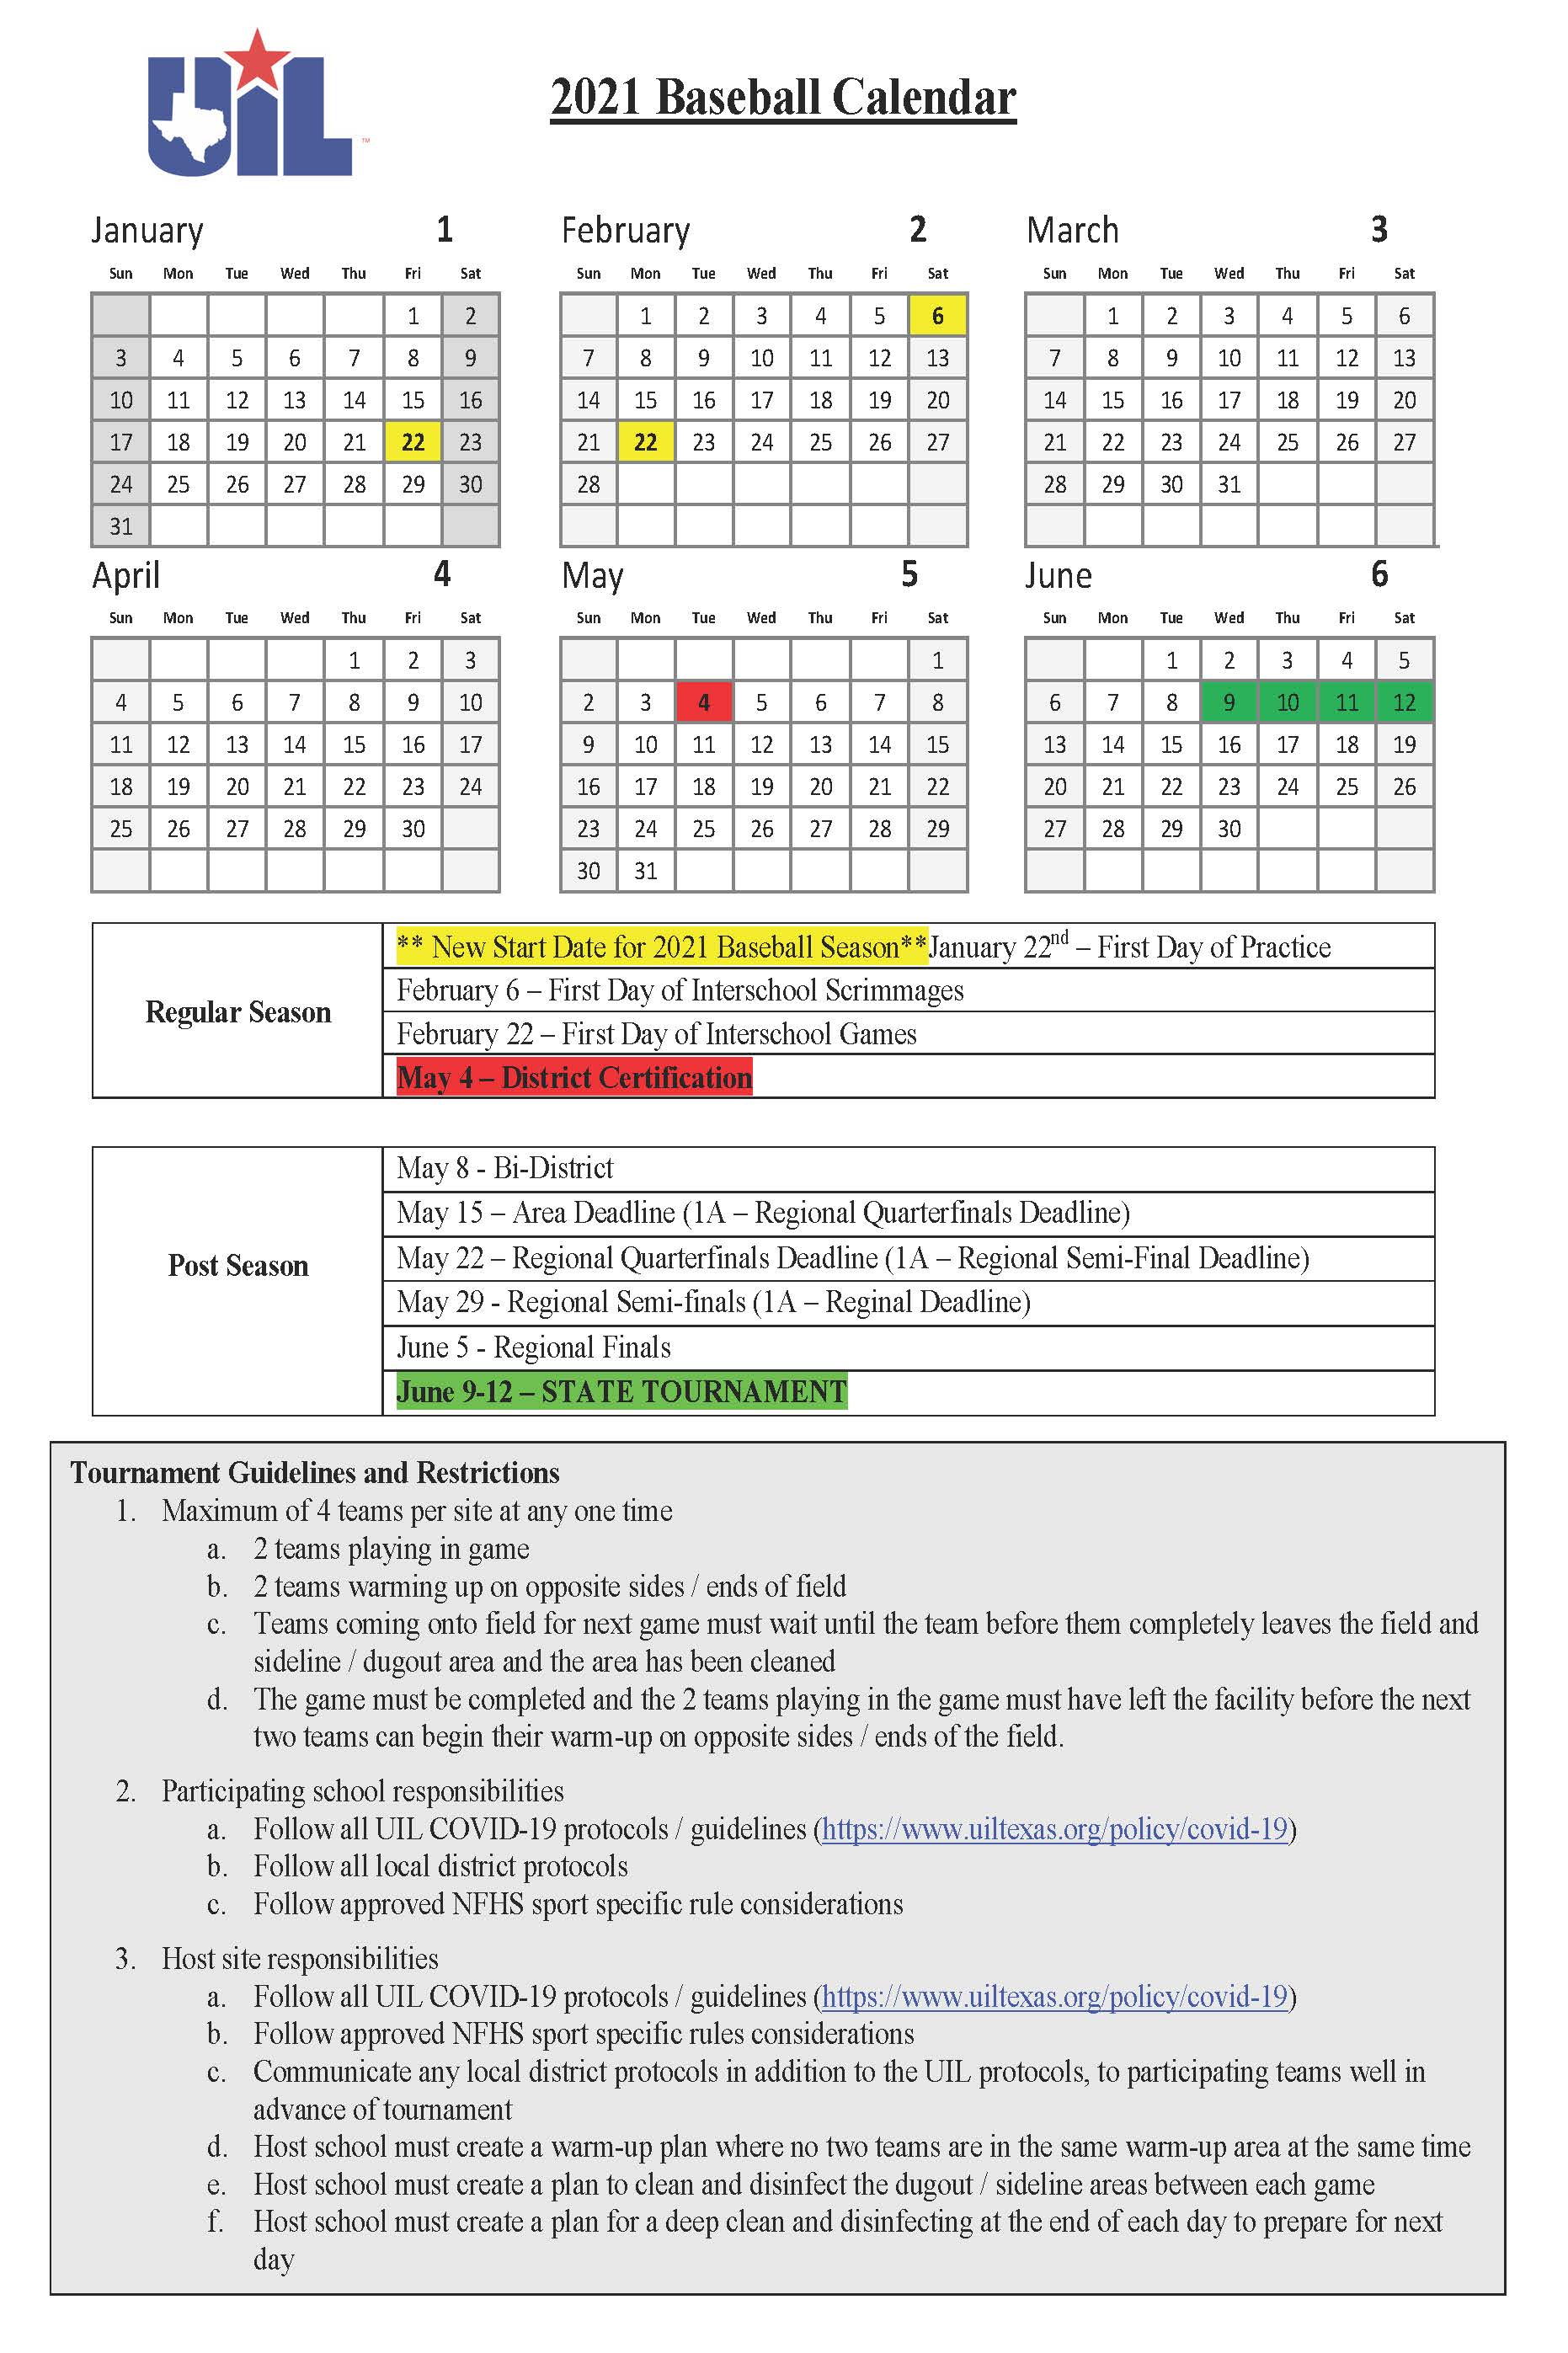 2020-21 Baseball COVID Calendar and Update — Baseball State Tournament